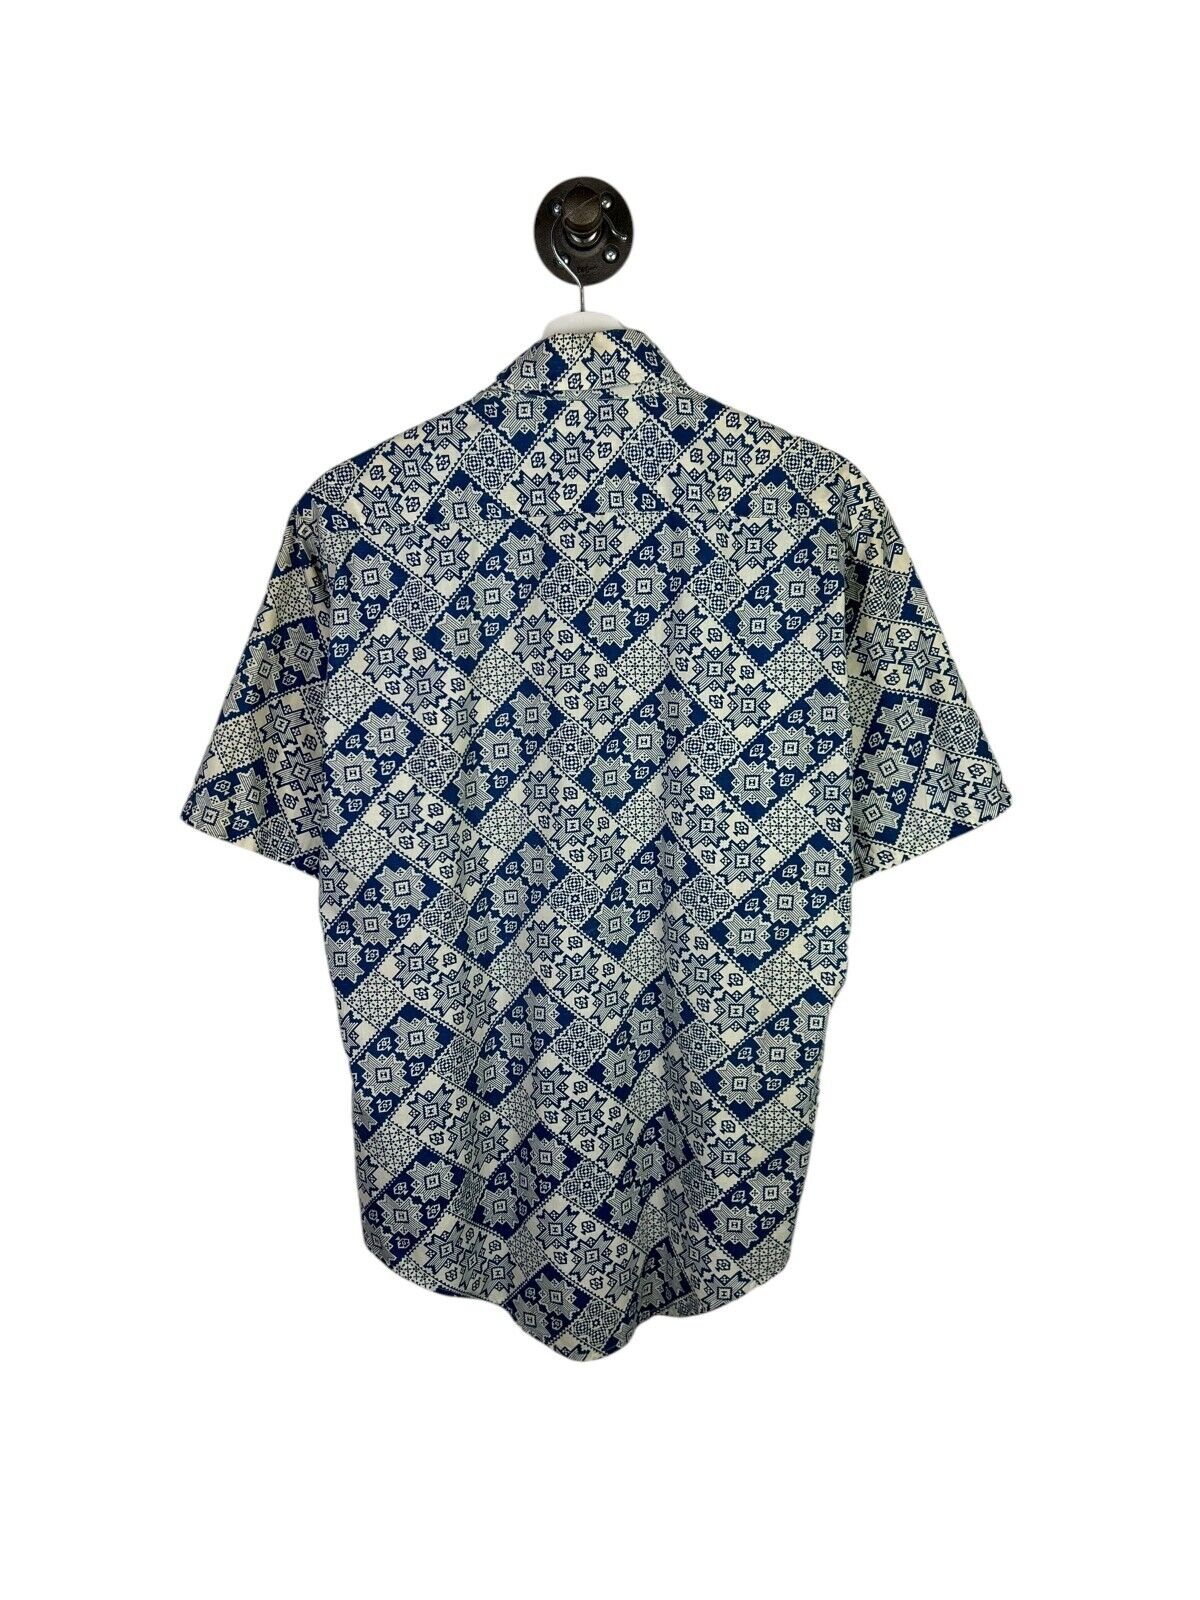 Vintage 60s/70s Open Door Geometric Print Short Sleeve Button Up Shirt Sz Medium